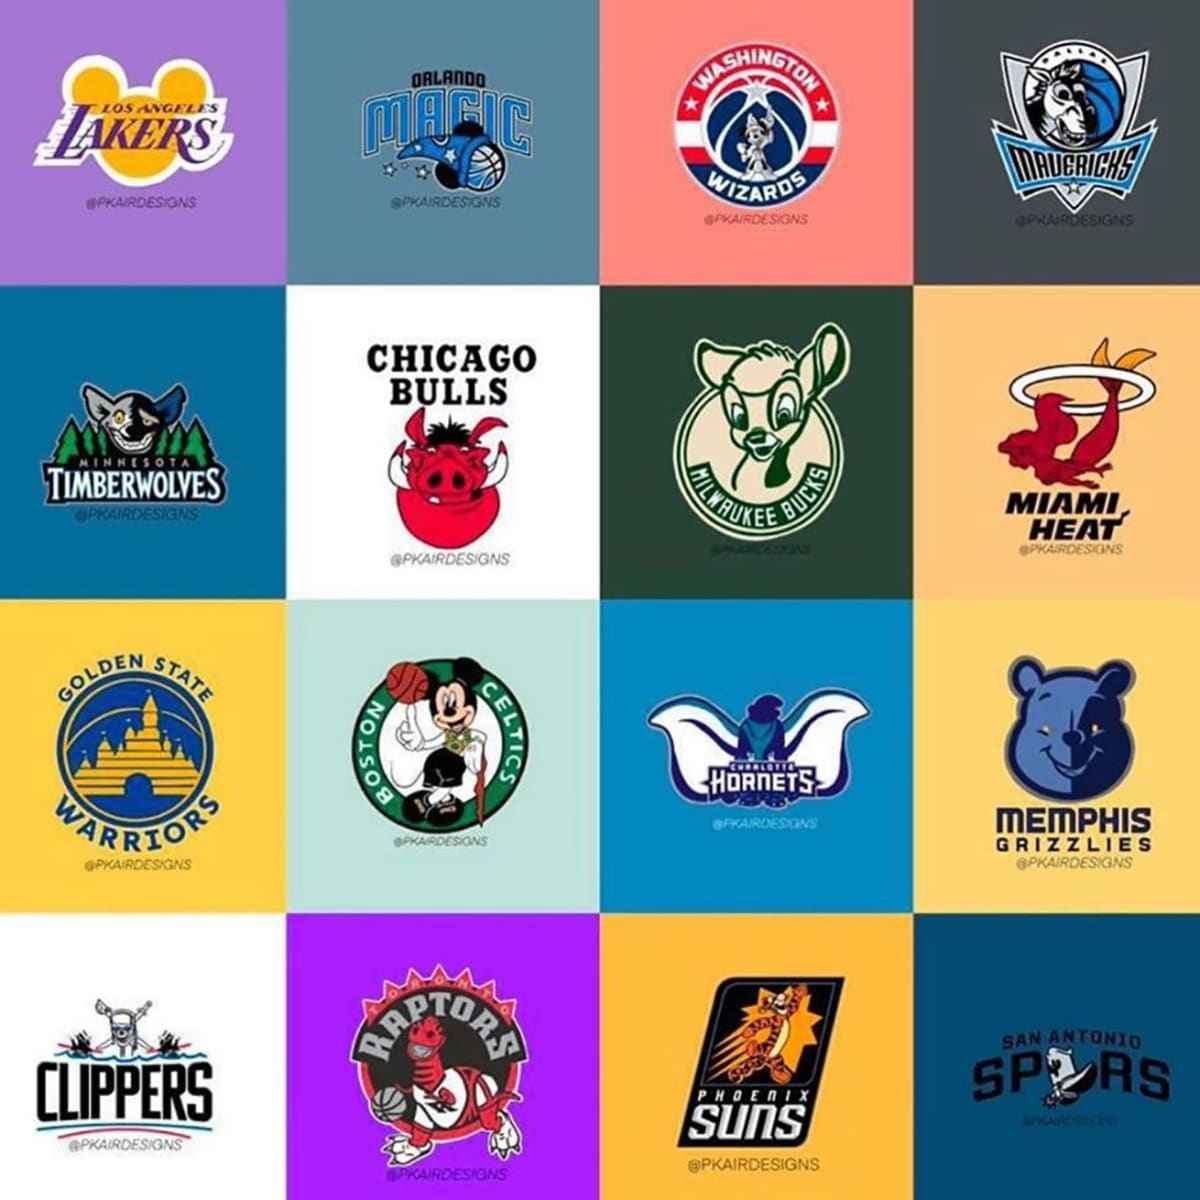 NBA and Disney team logos